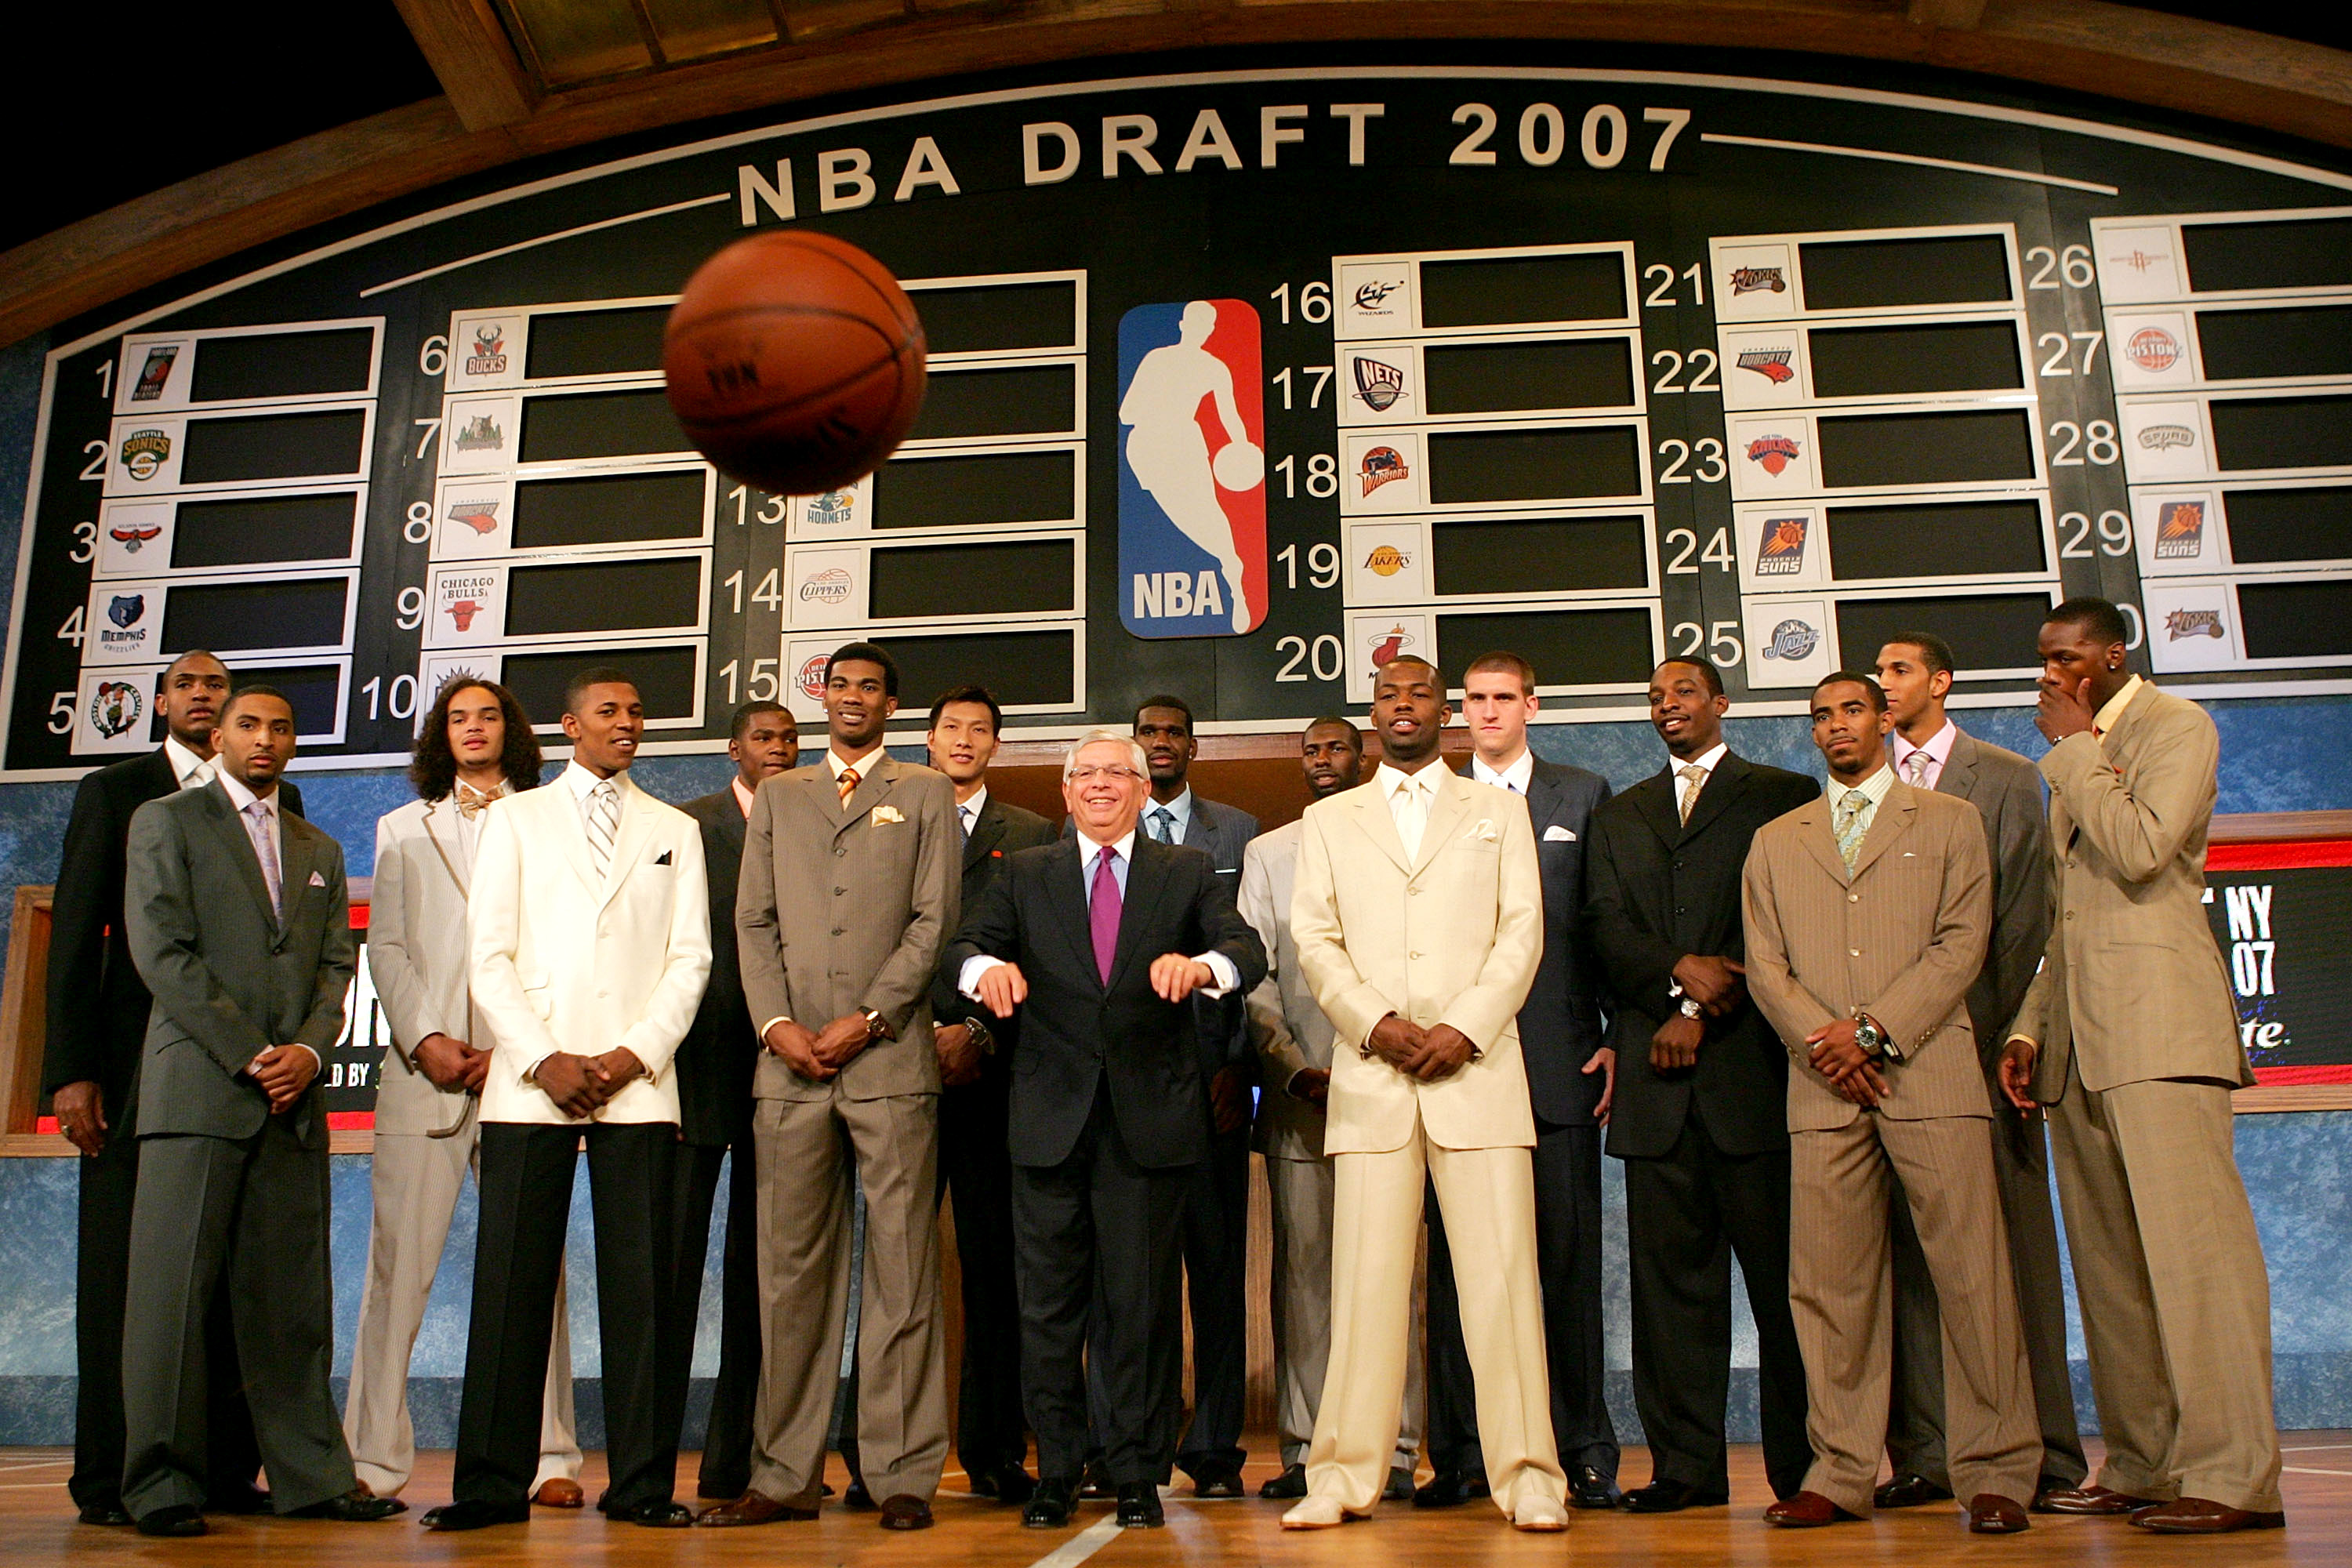 2003 vs 2017 NBA draft suits. : r/sports